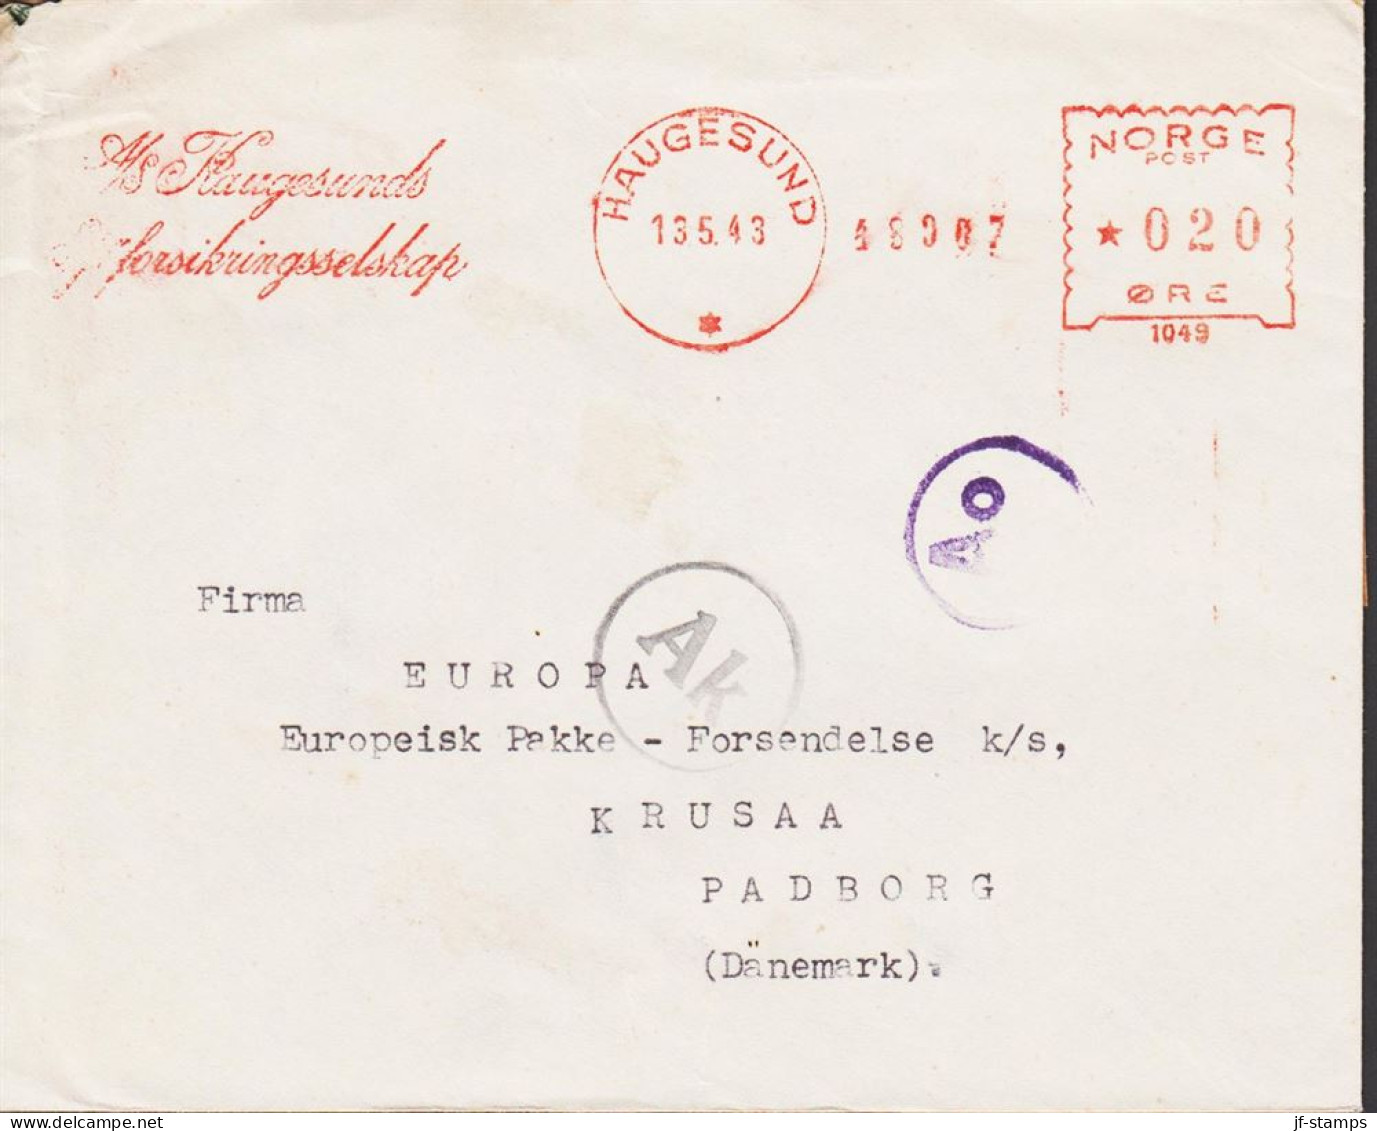 1943. NORGE. Very Interesting Cover To Firma EUROPA Europæisk Pakke Forsendelse, KRUSAA PADBORG DANMARK Ca... - JF545670 - Covers & Documents